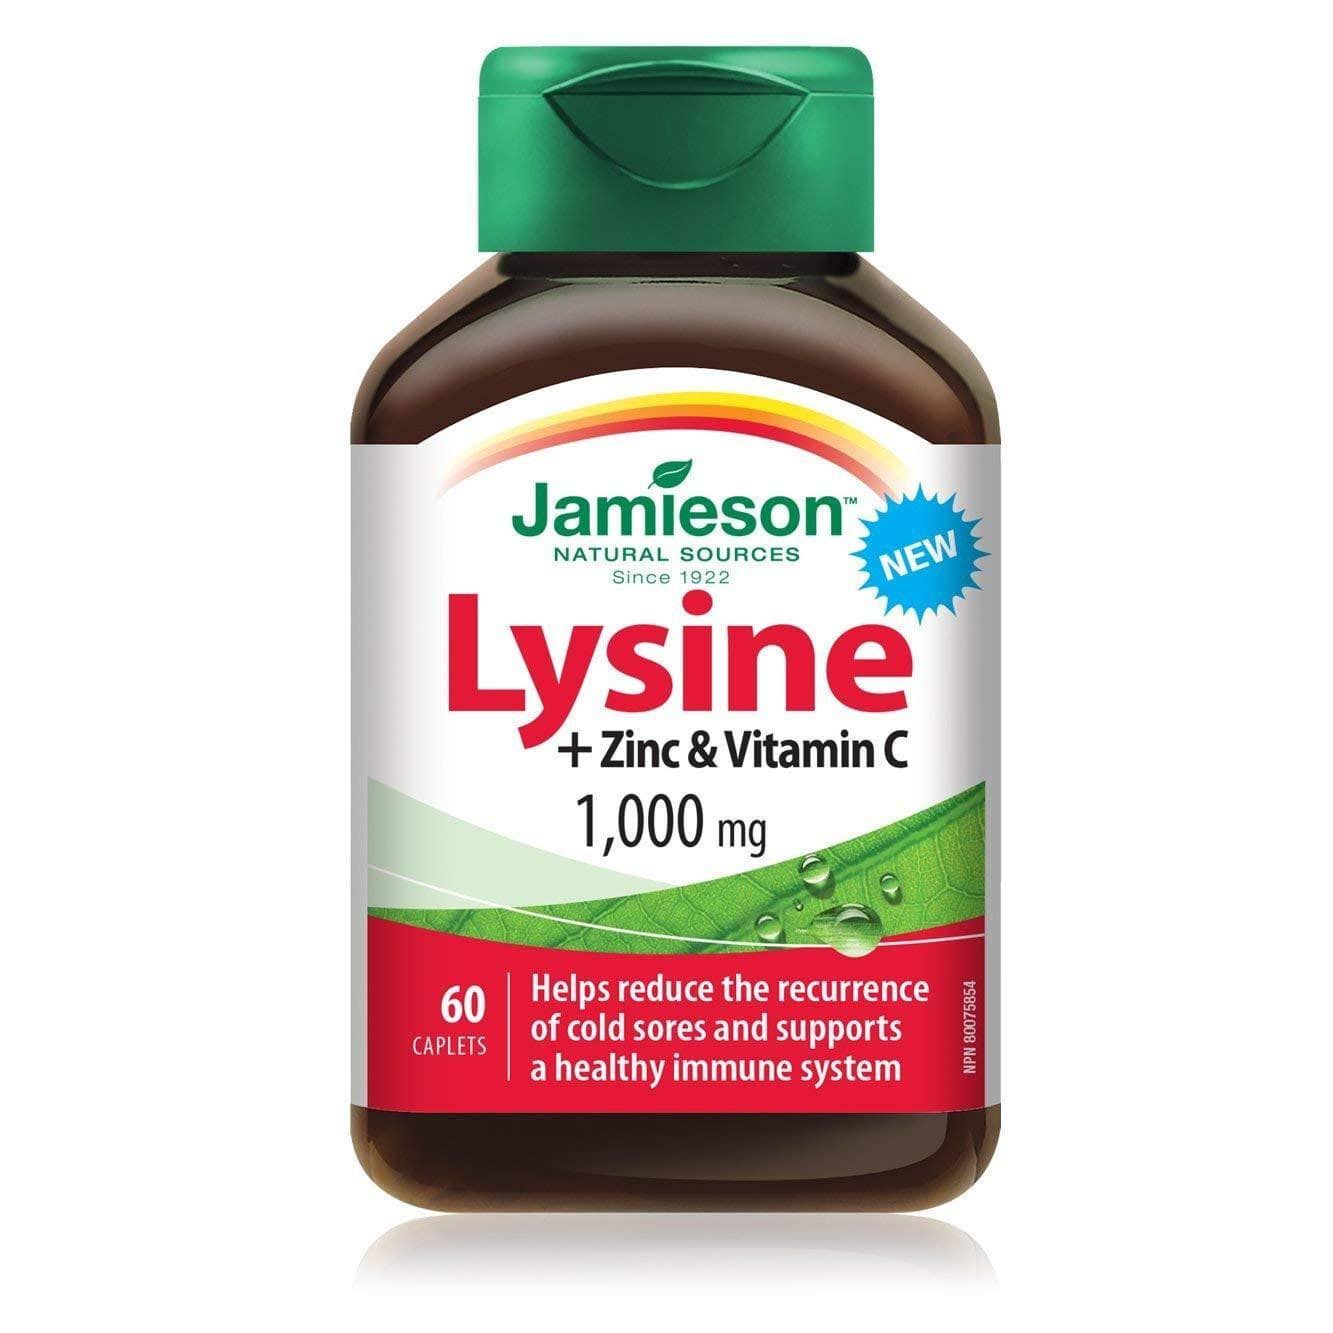 Jamieson Lysine + Zinc & Vitamin C